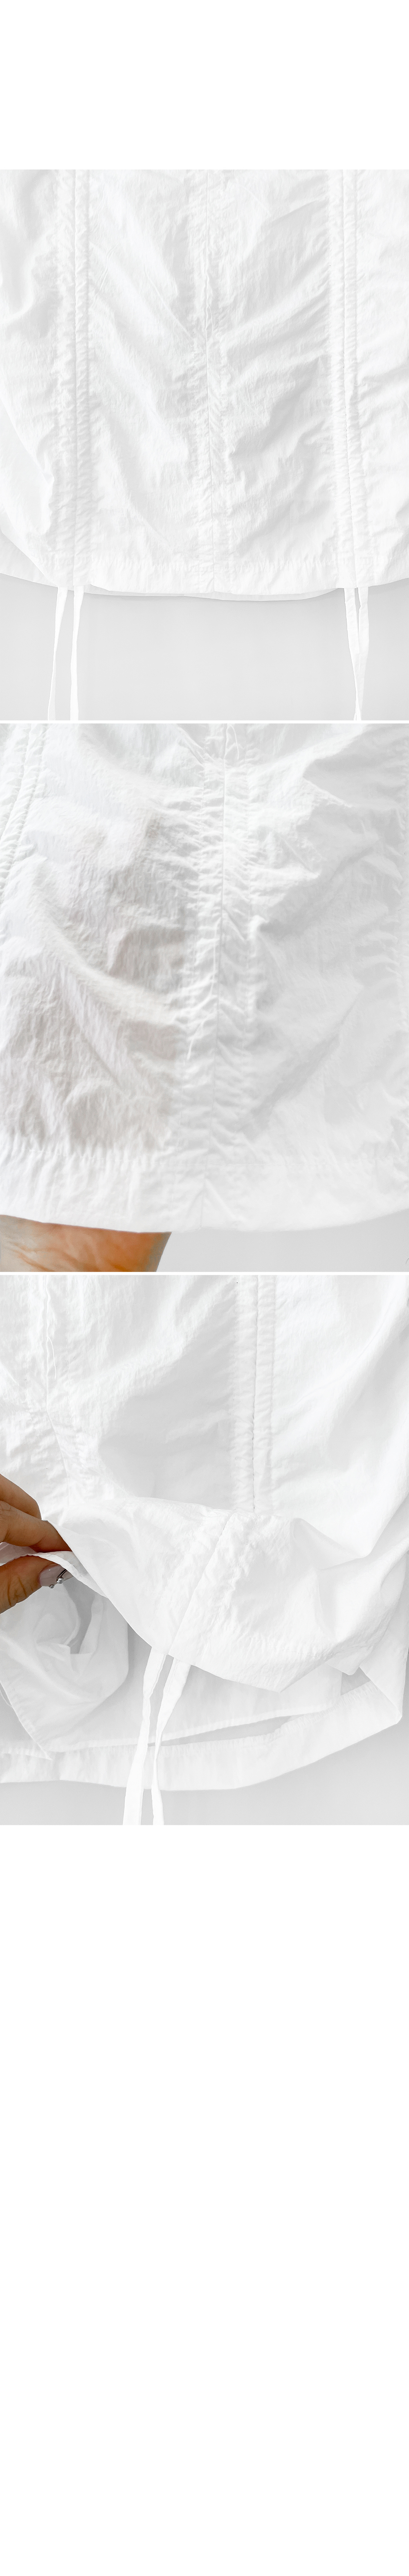 short sleeved tee detail image-S1L15